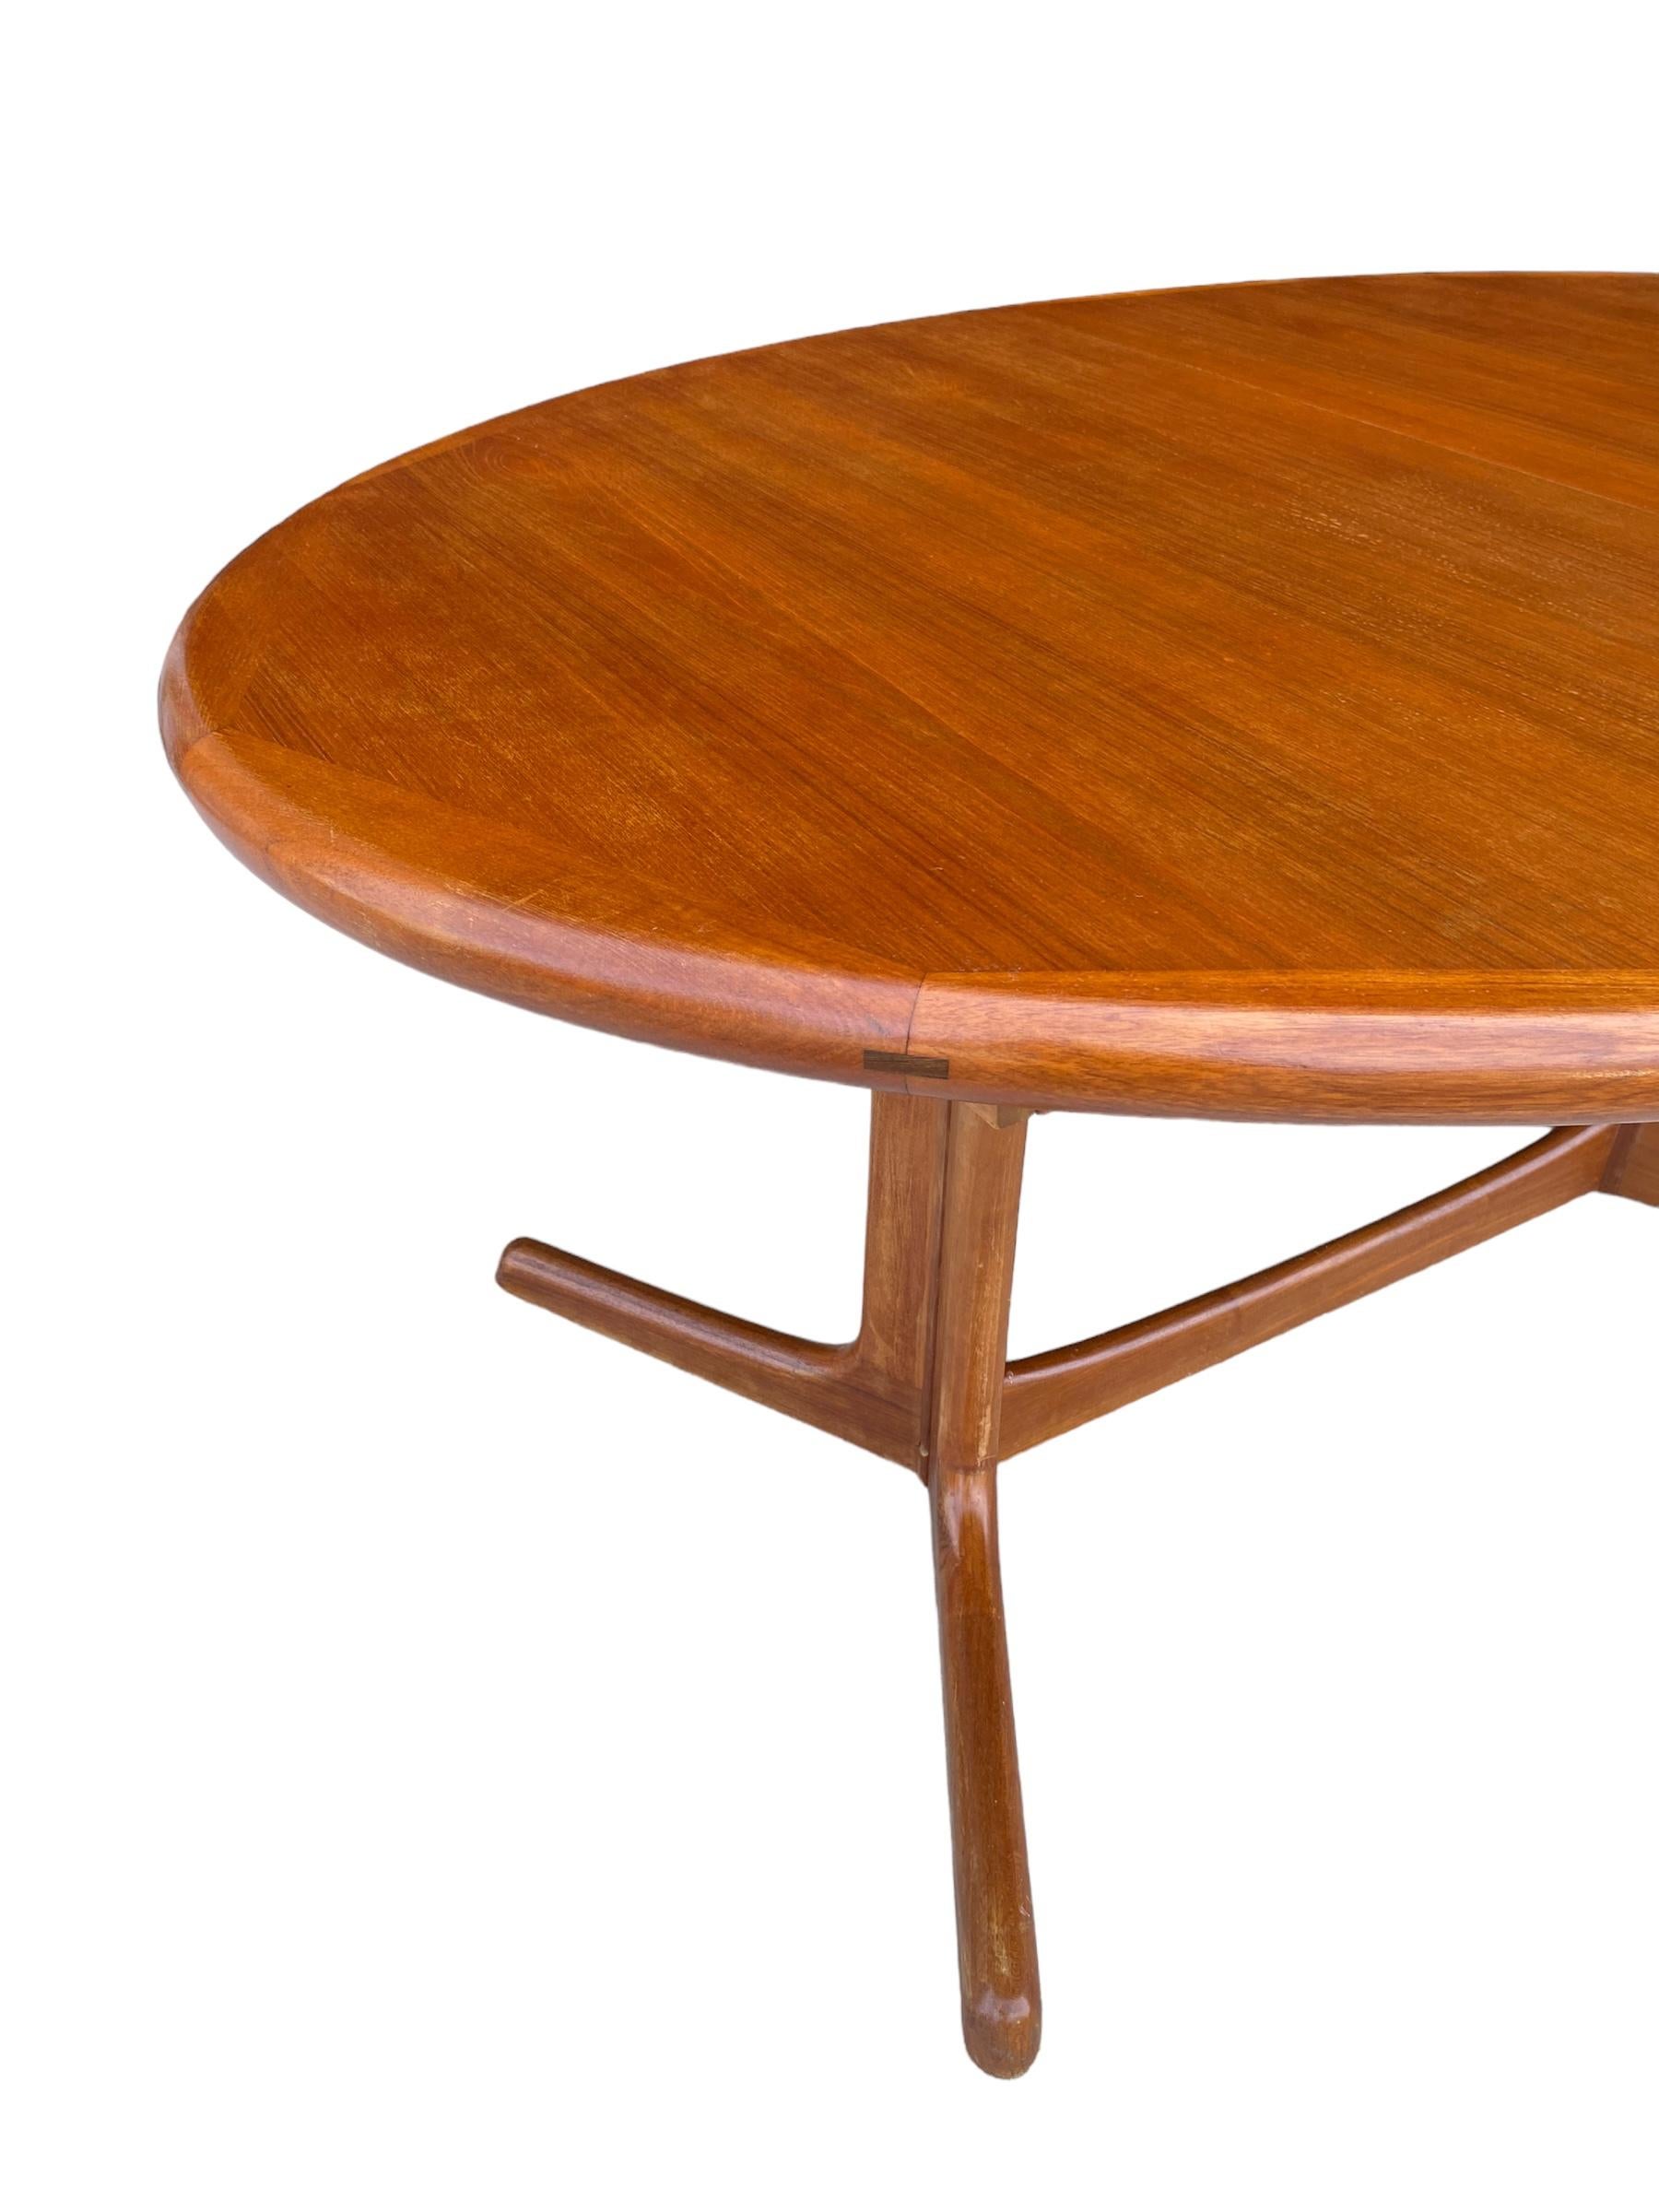 Scandinavian Modern Danish Oval Dining Table in Teak by Dyrlund For Sale